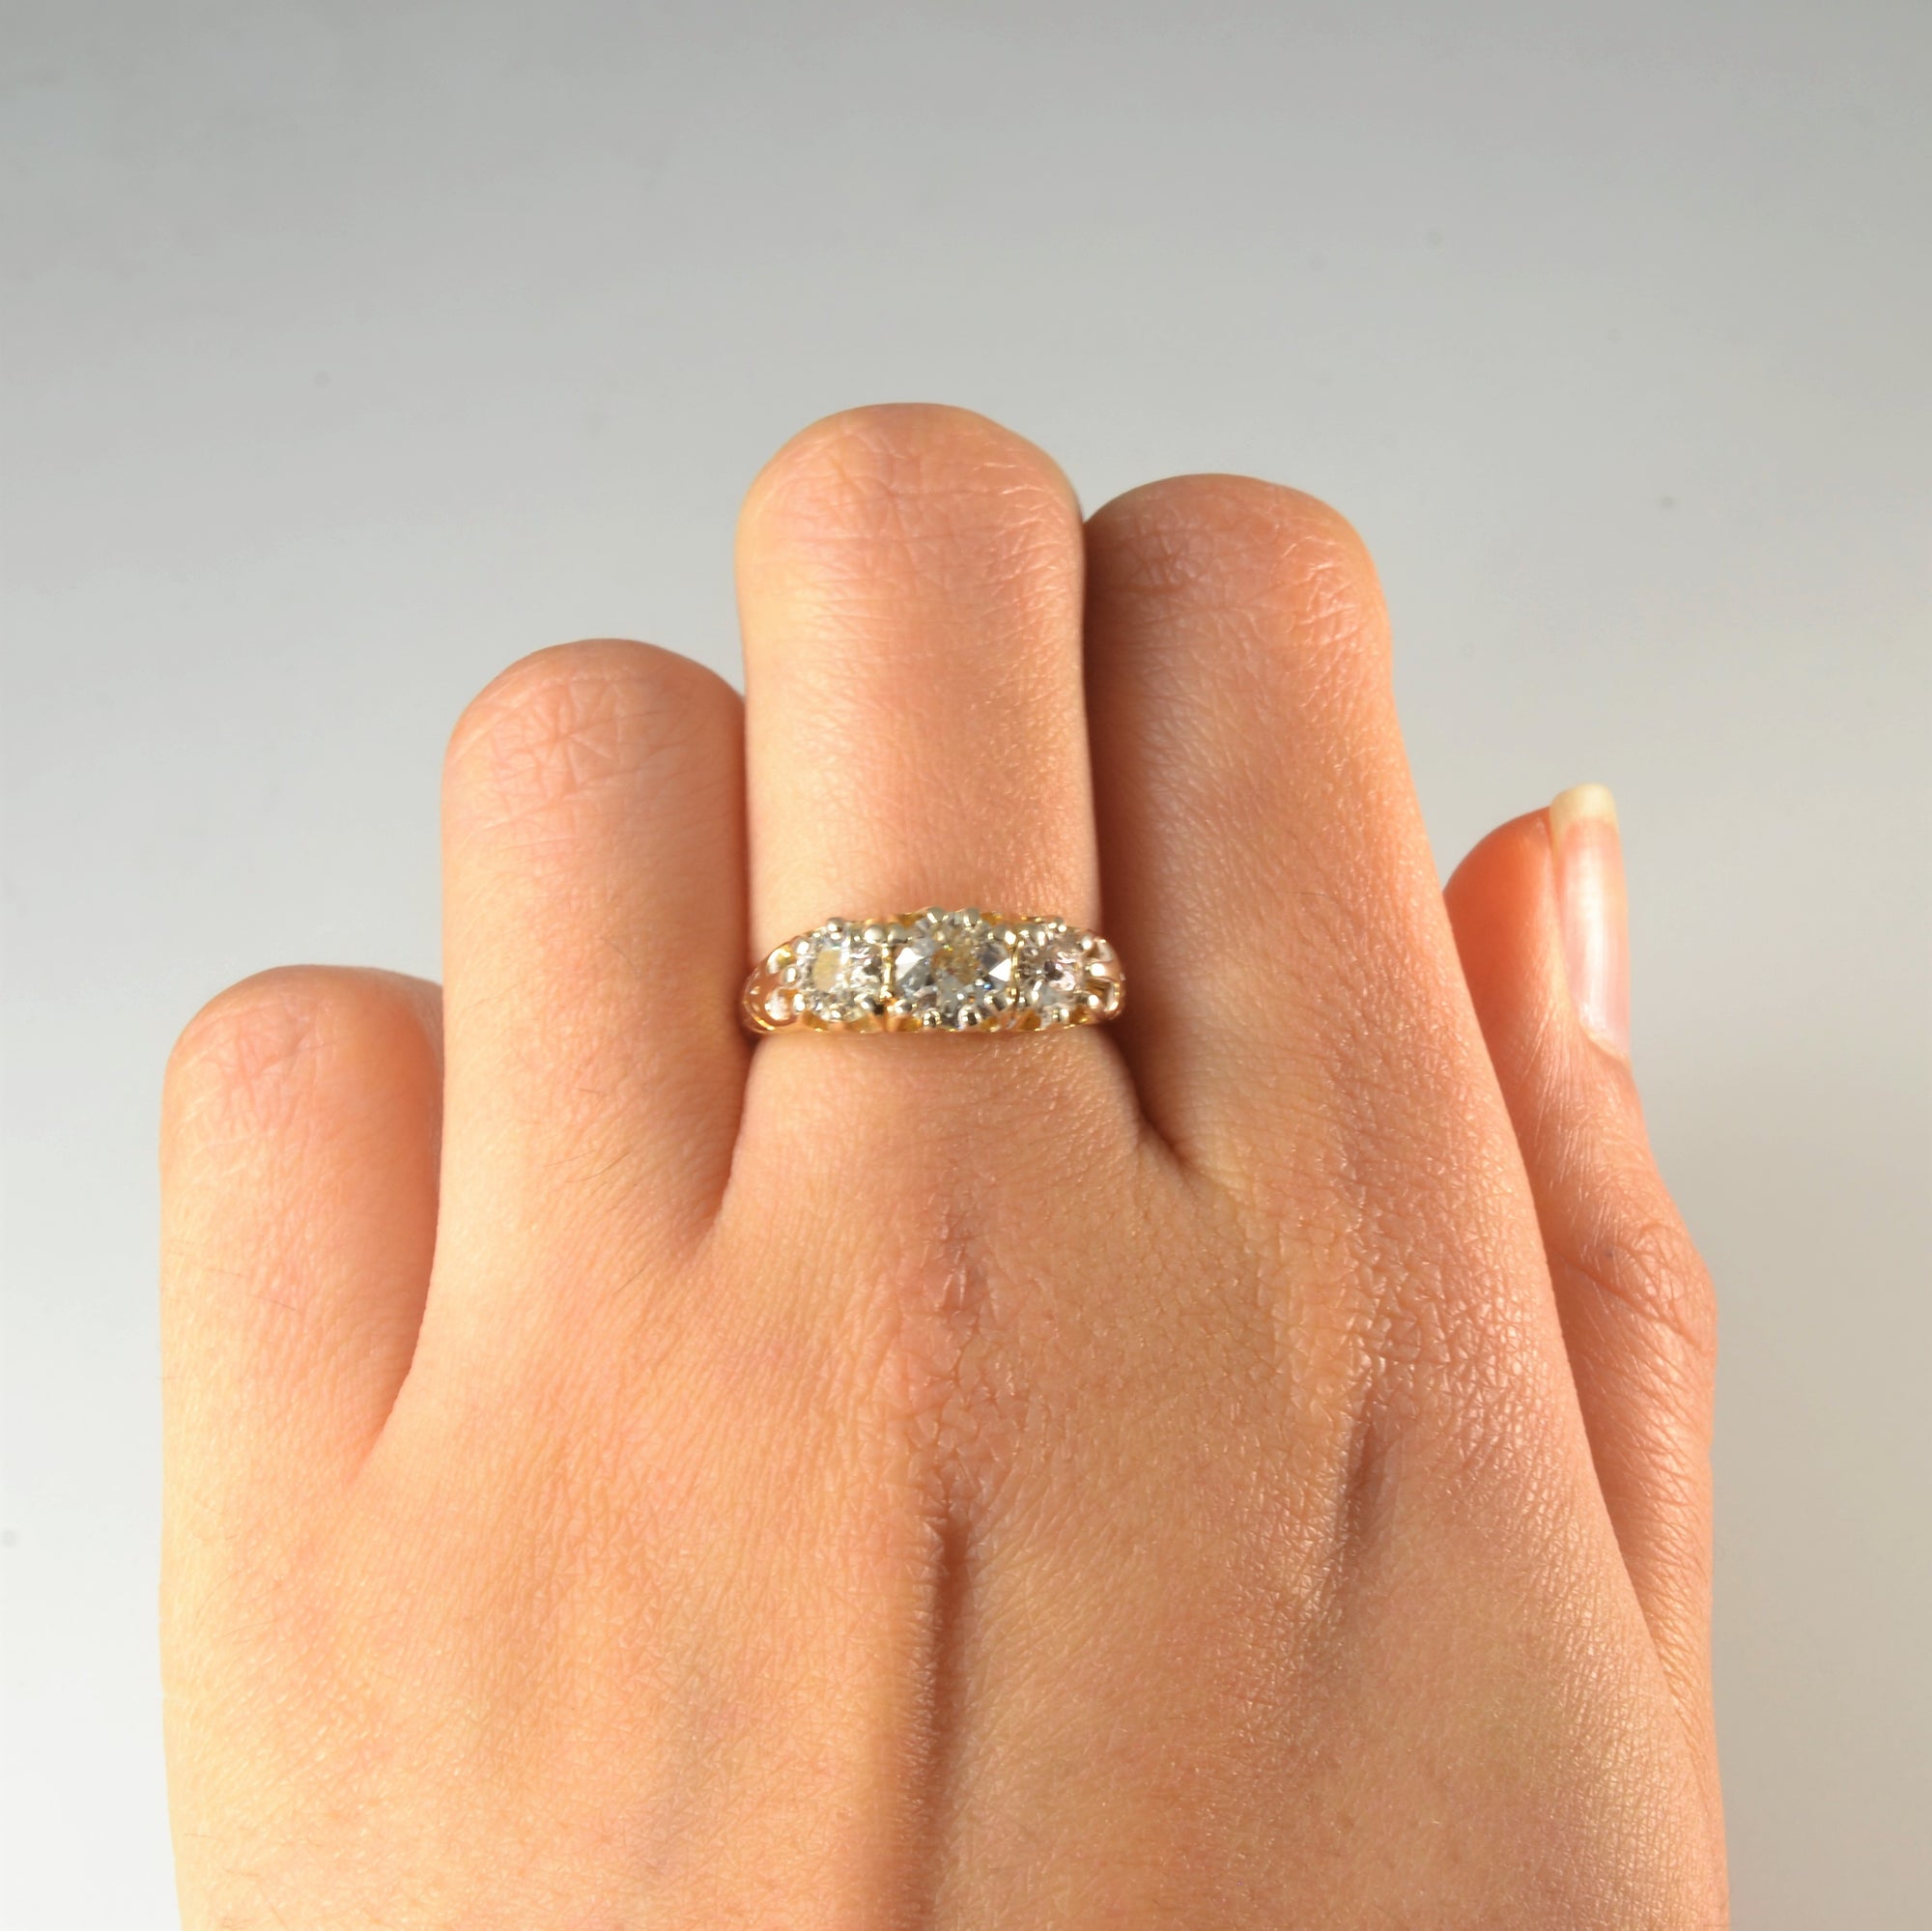 Early 1900s Three Stone Diamond Ring | 1.45ctw | SZ 6 |